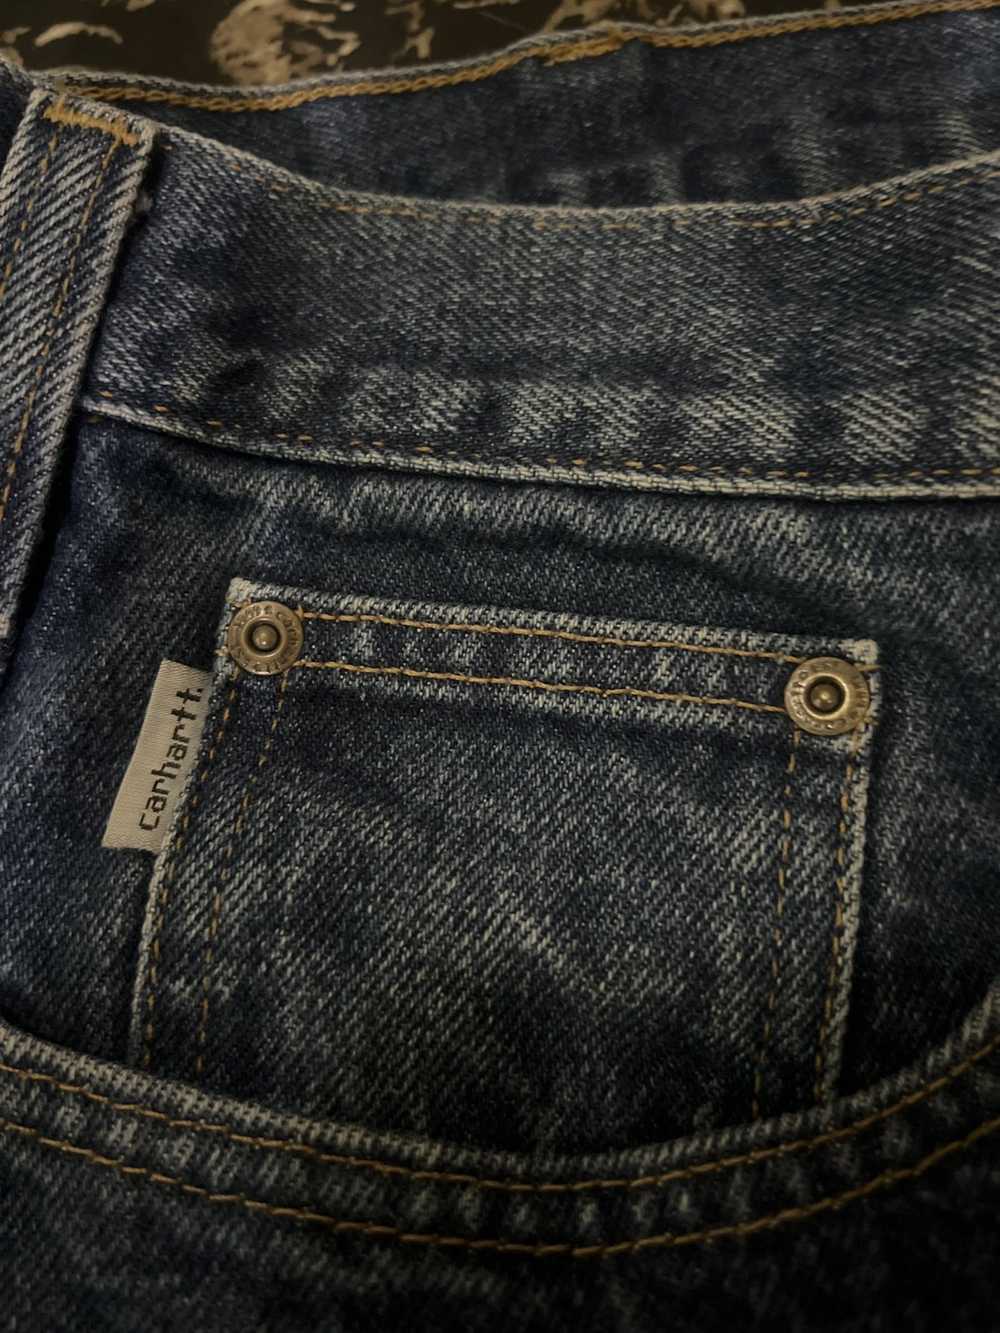 Carhartt OG Carhartt Jeans Traditional Fit - image 2